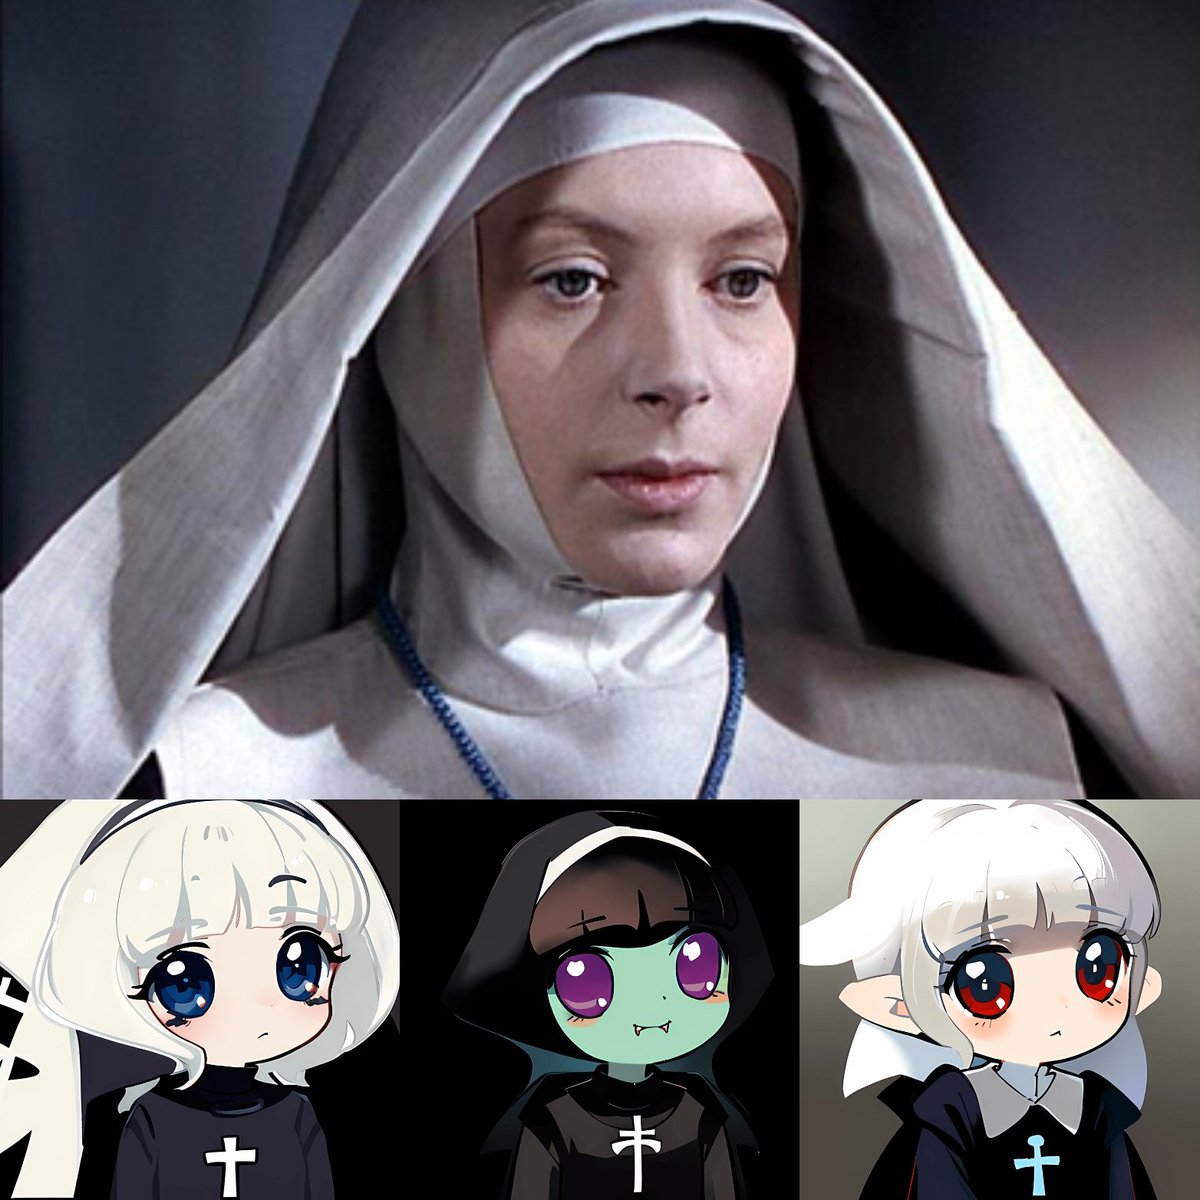 We got nuns
We got vampires
We got vampire nuns
💙🫀🙃

@Sprotolady
#DN404 #ERC404 $SHADOW